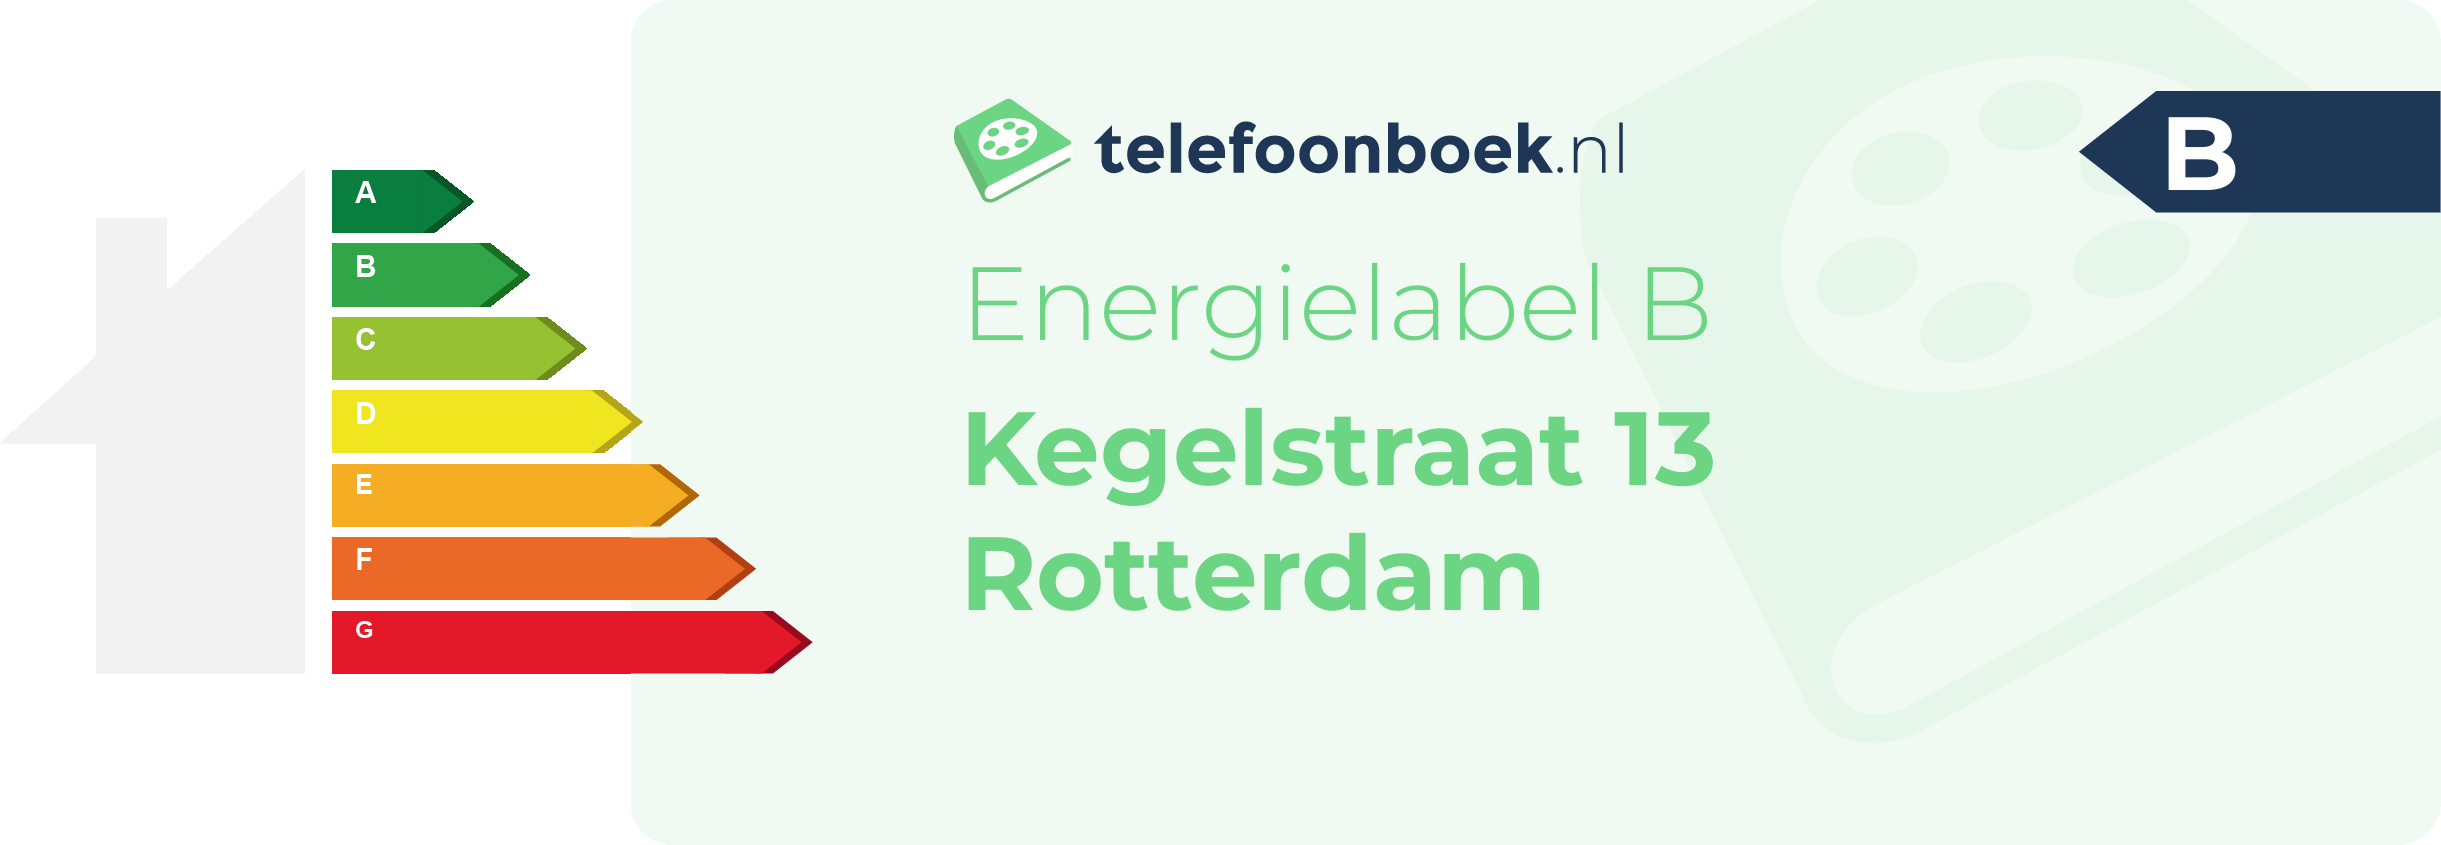 Energielabel Kegelstraat 13 Rotterdam